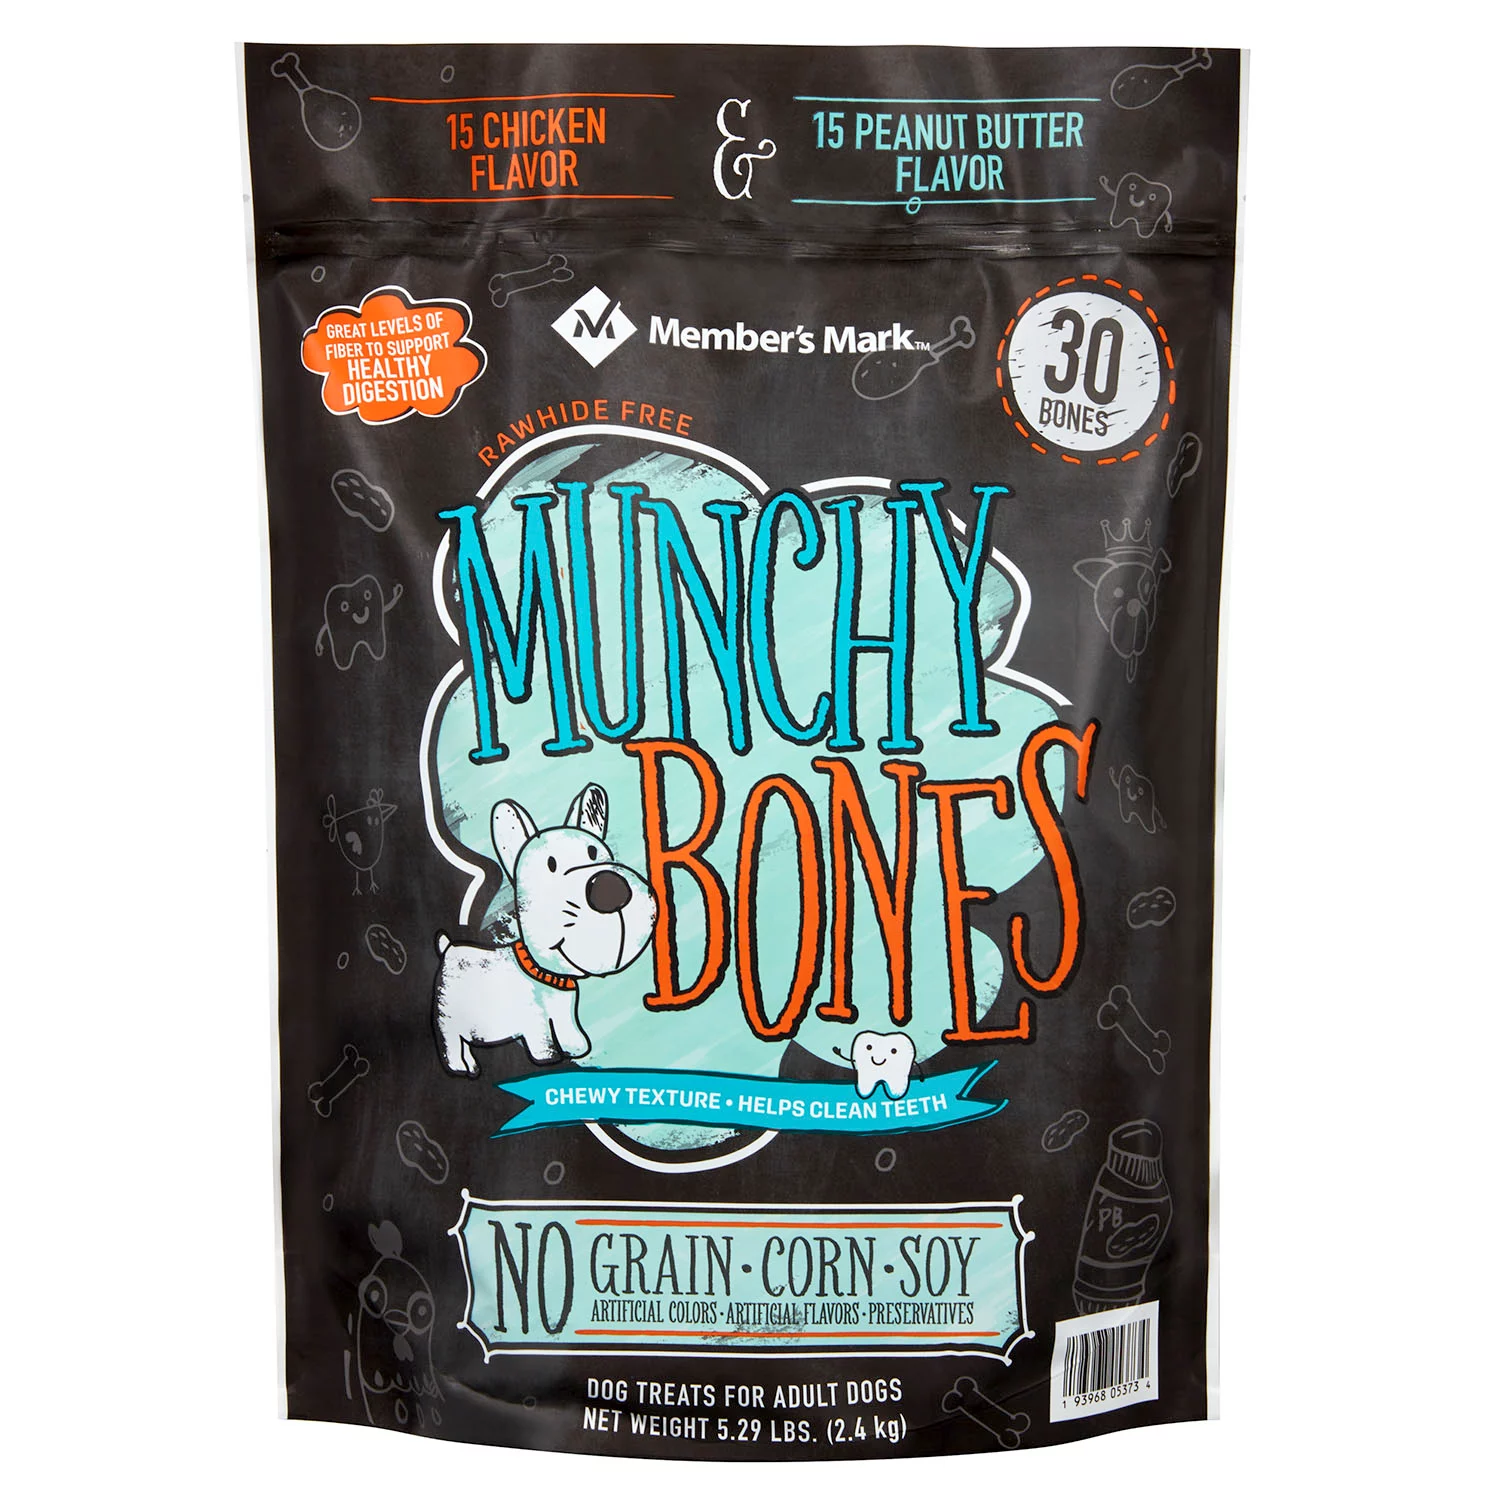 Member’s Mark Munchy Bones Dog Treats for Adult Dogs (5.29 lb.)